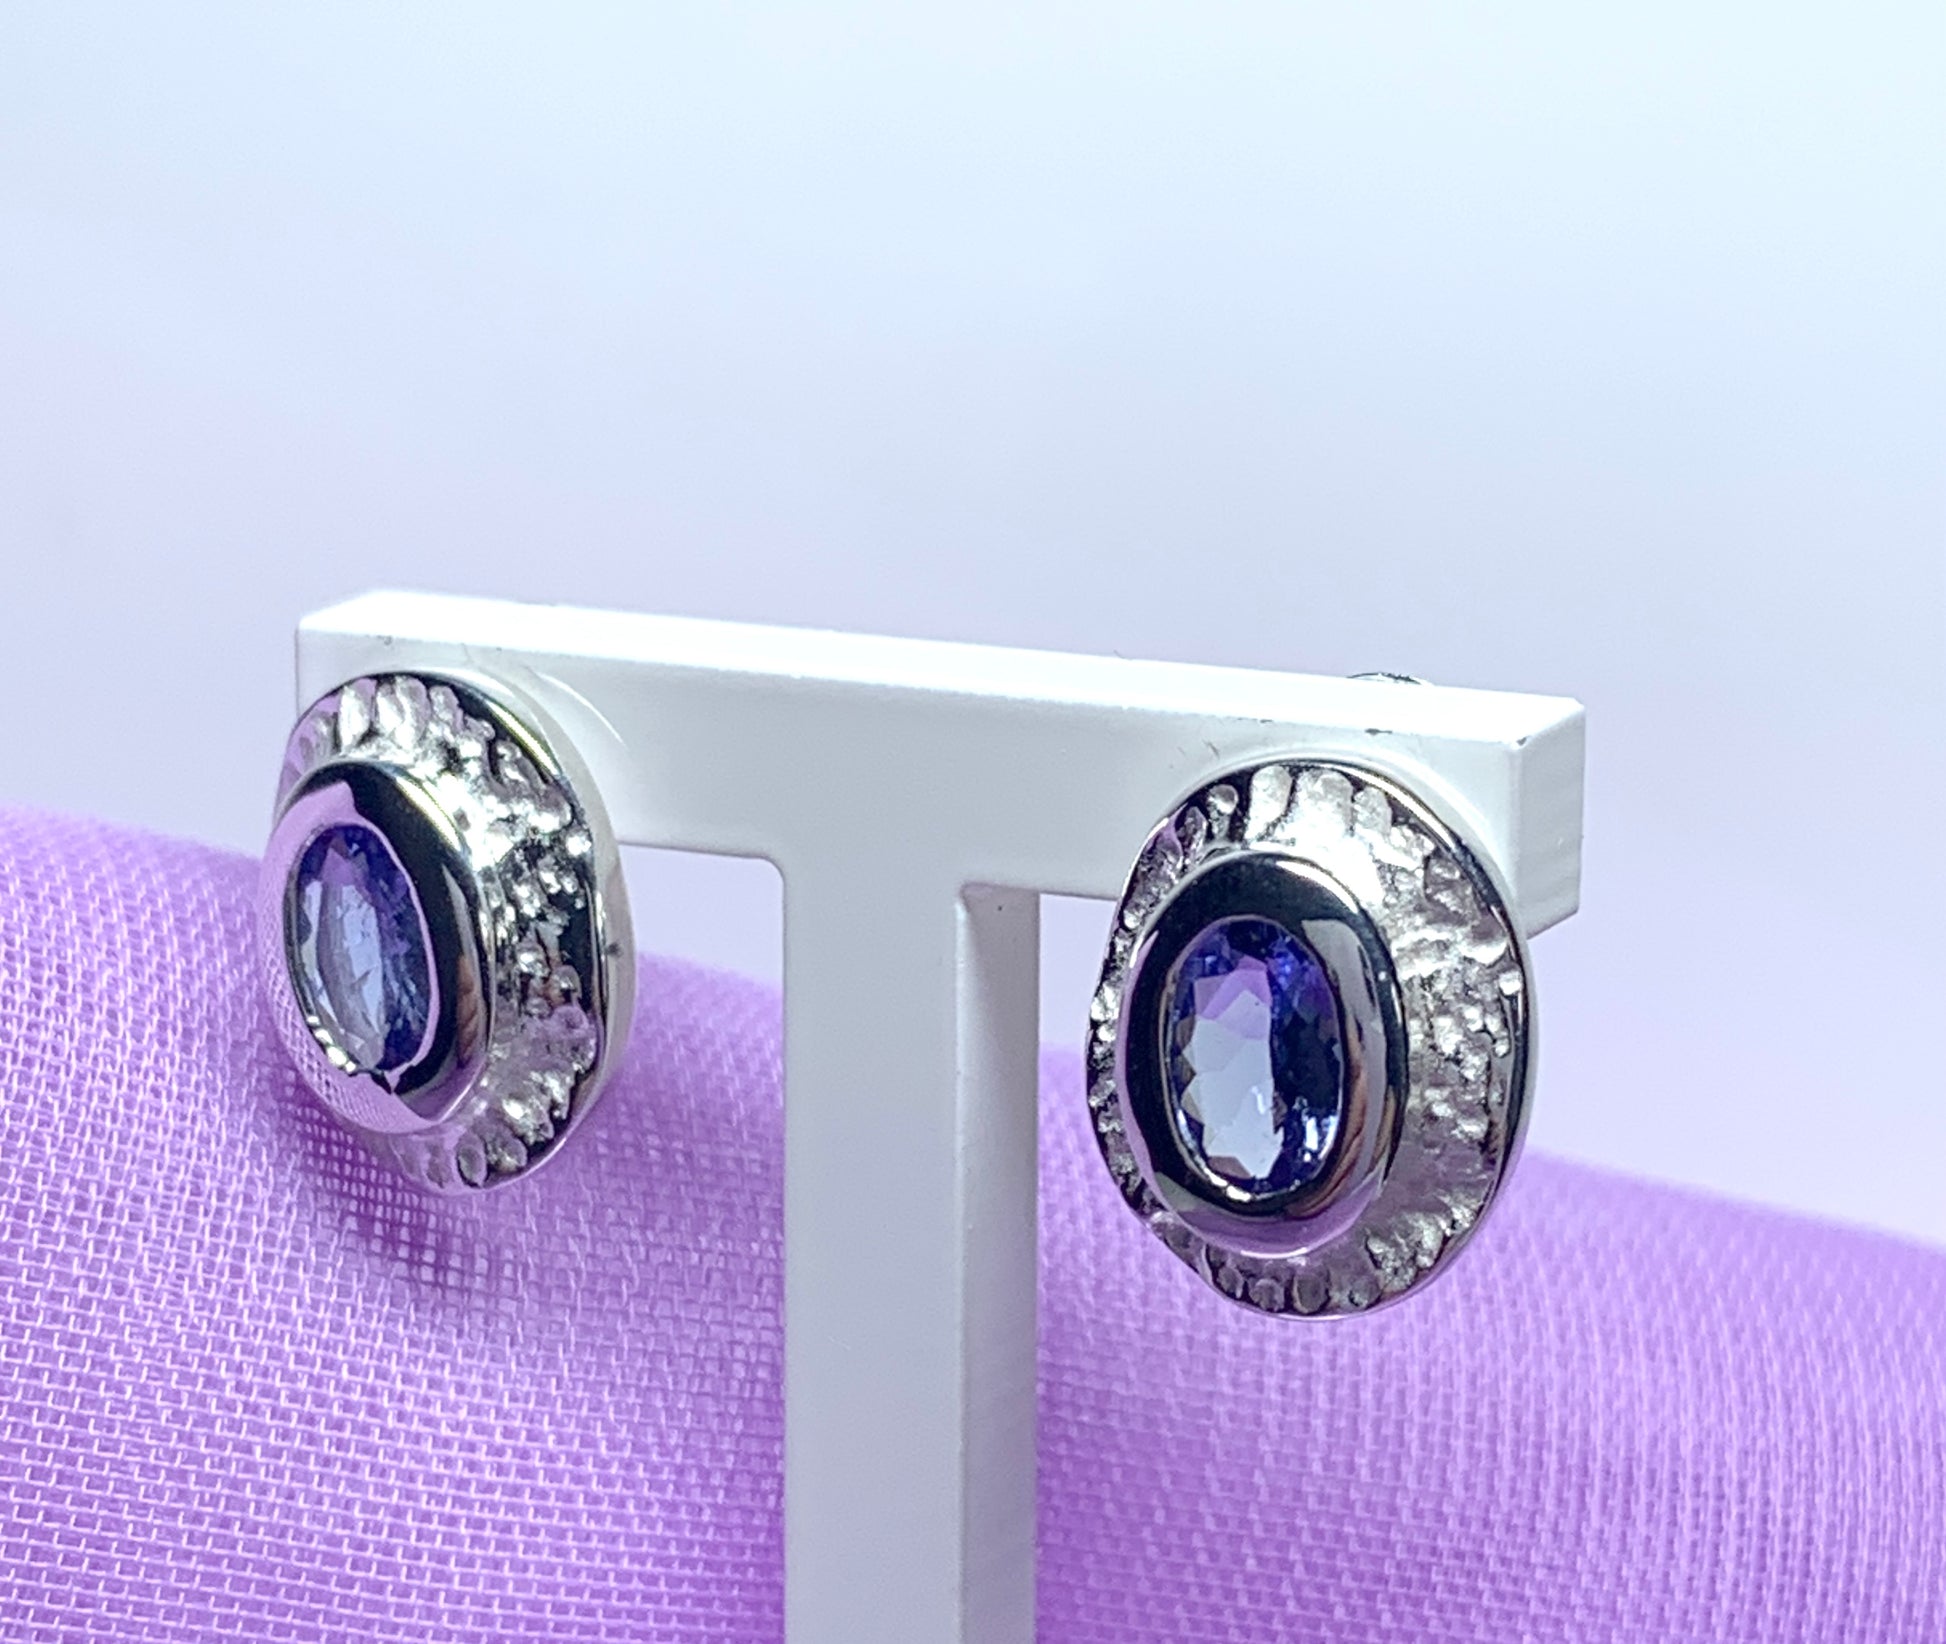 Real tanzanite oval stud earrings sterling silver